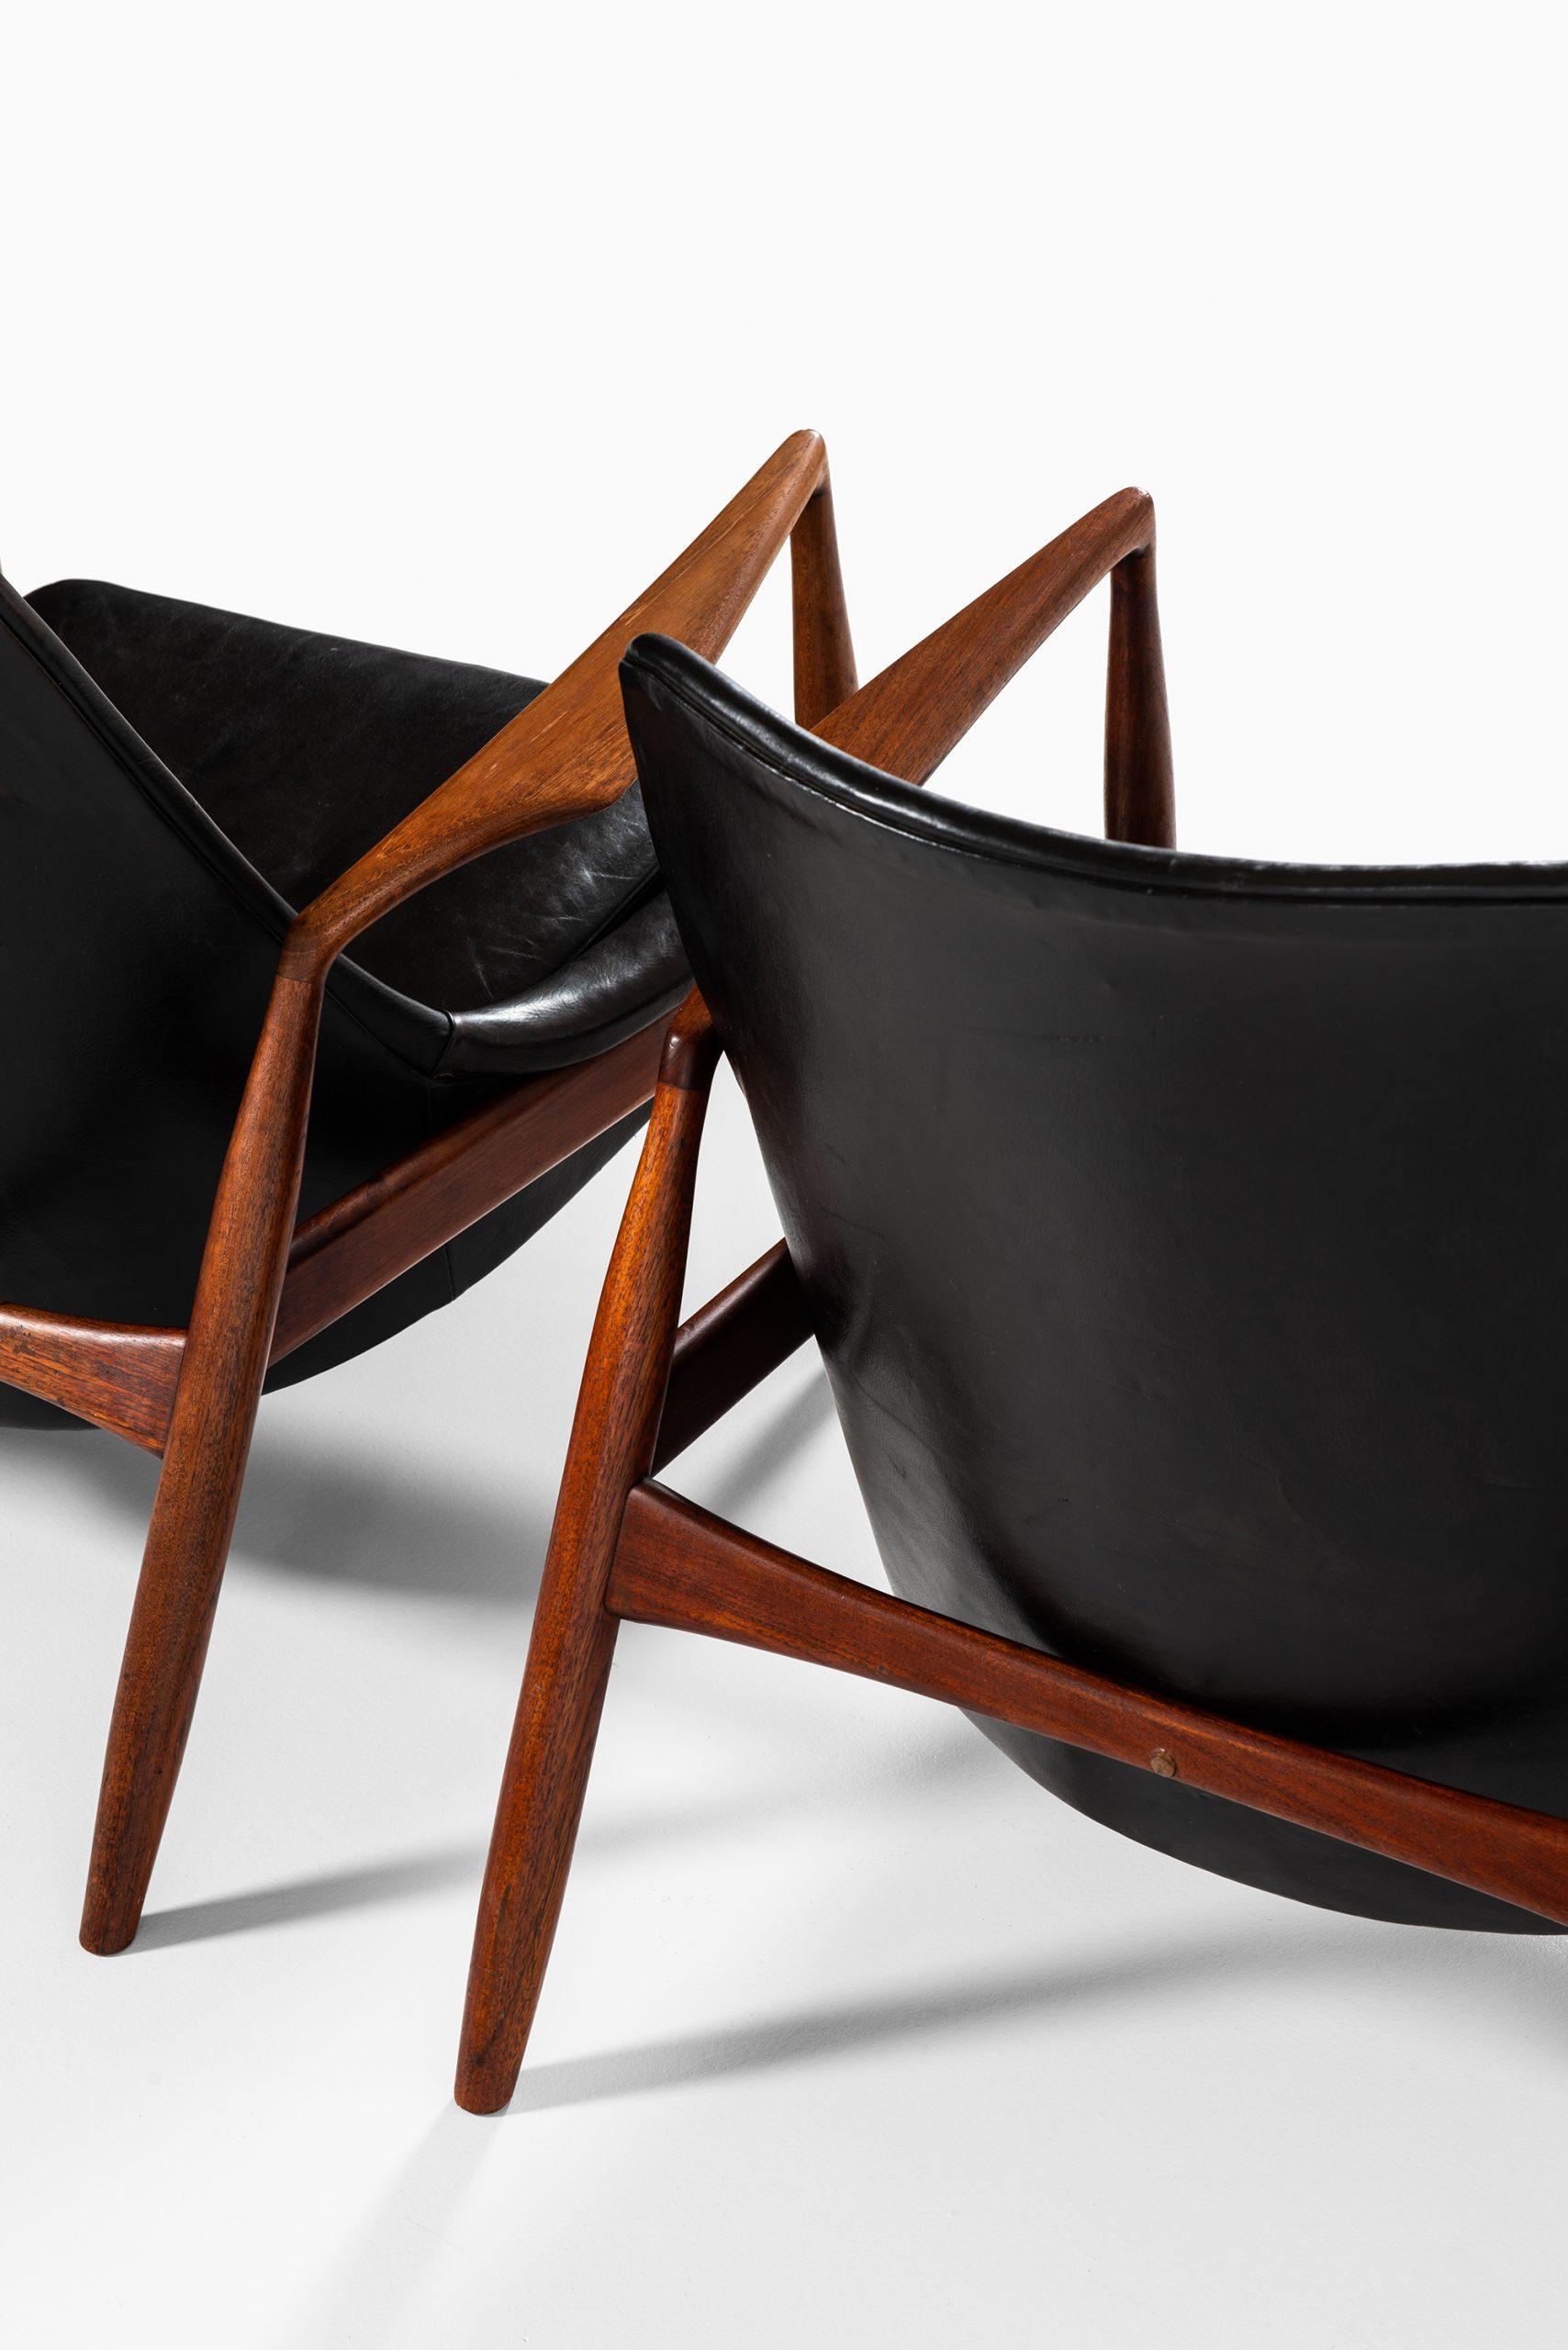 Scandinavian Modern Ib Kofod-Larsen Easy Chairs Model Sälen / Seal Produced by OPE in Sweden For Sale